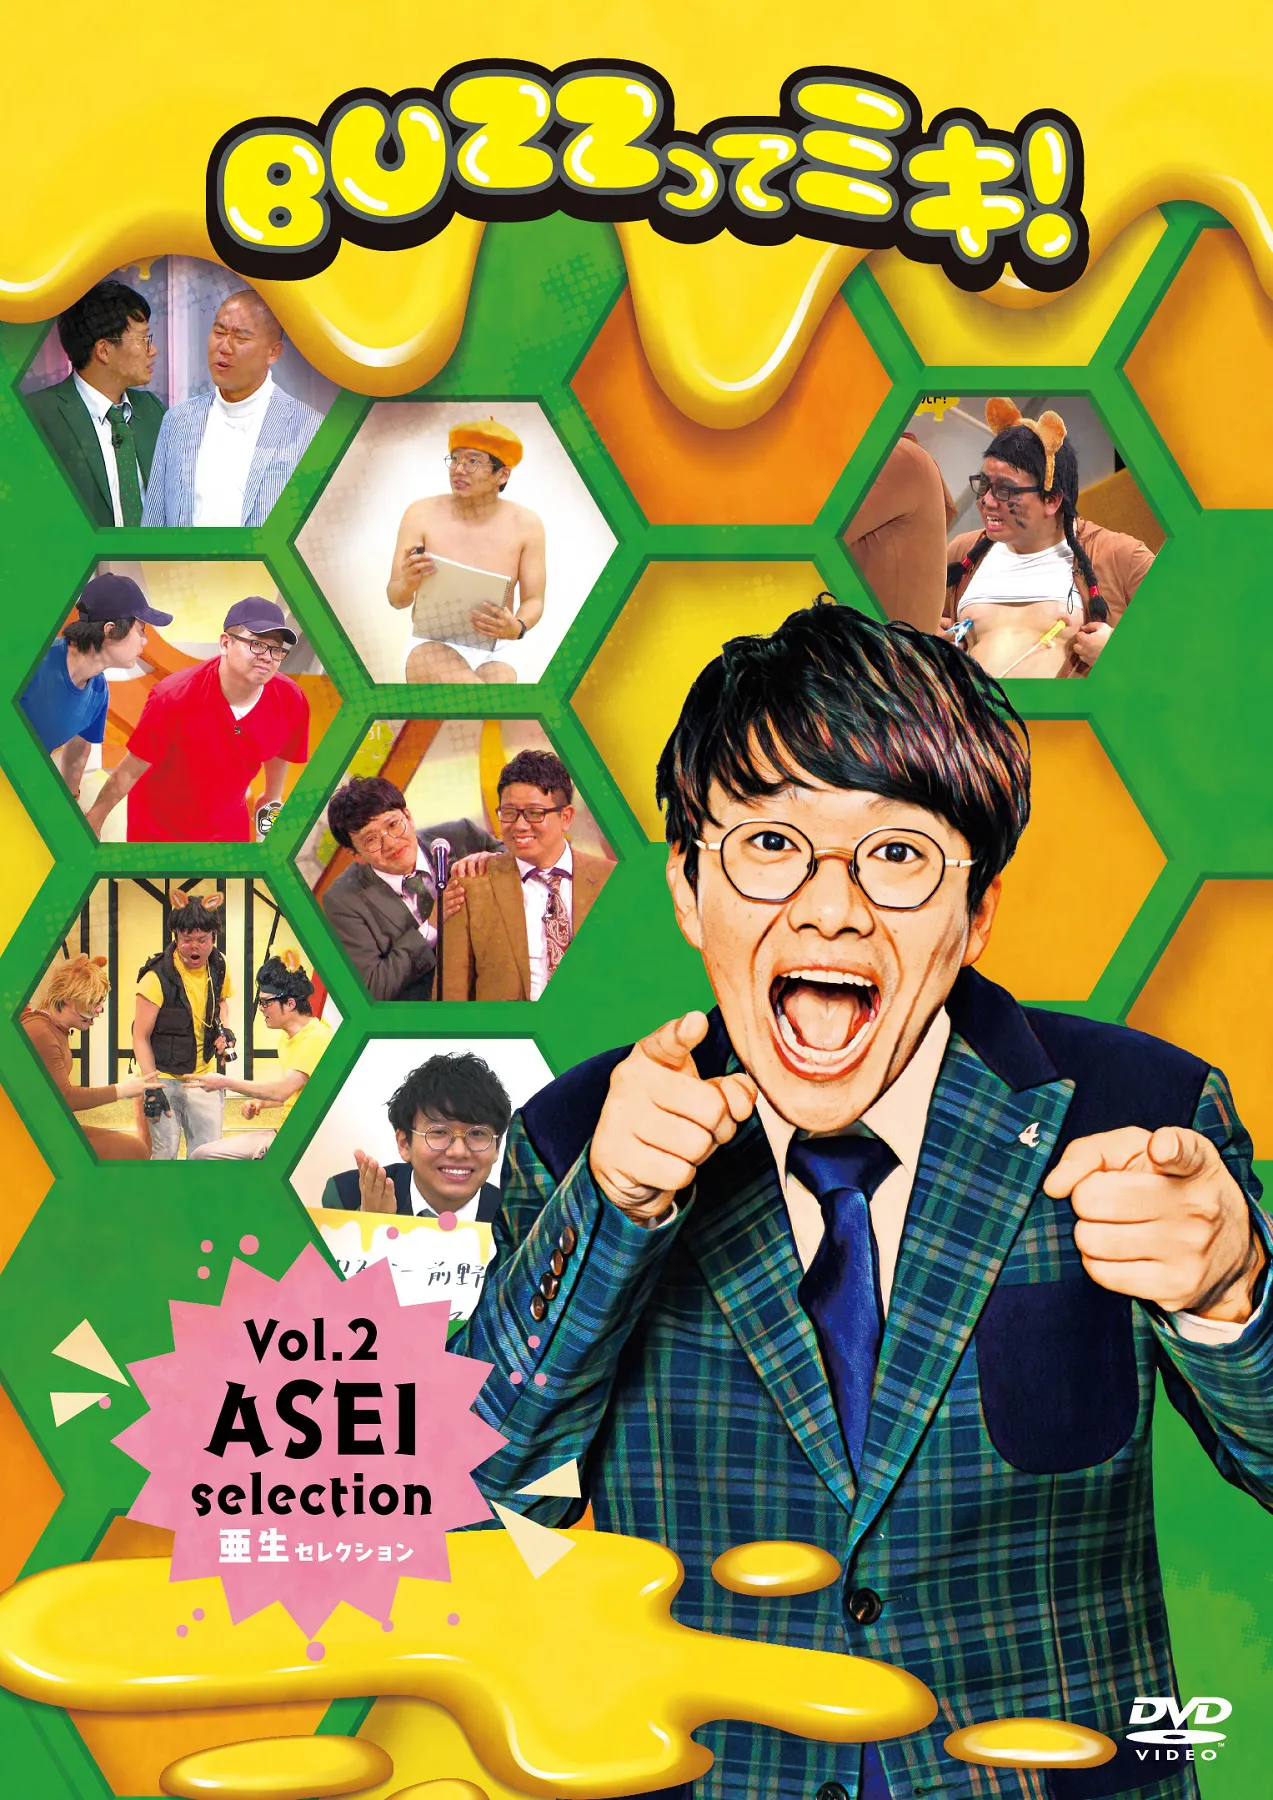 DVD「BUZZってミキ！ Vol.2 亜生セレクション」ジャケット